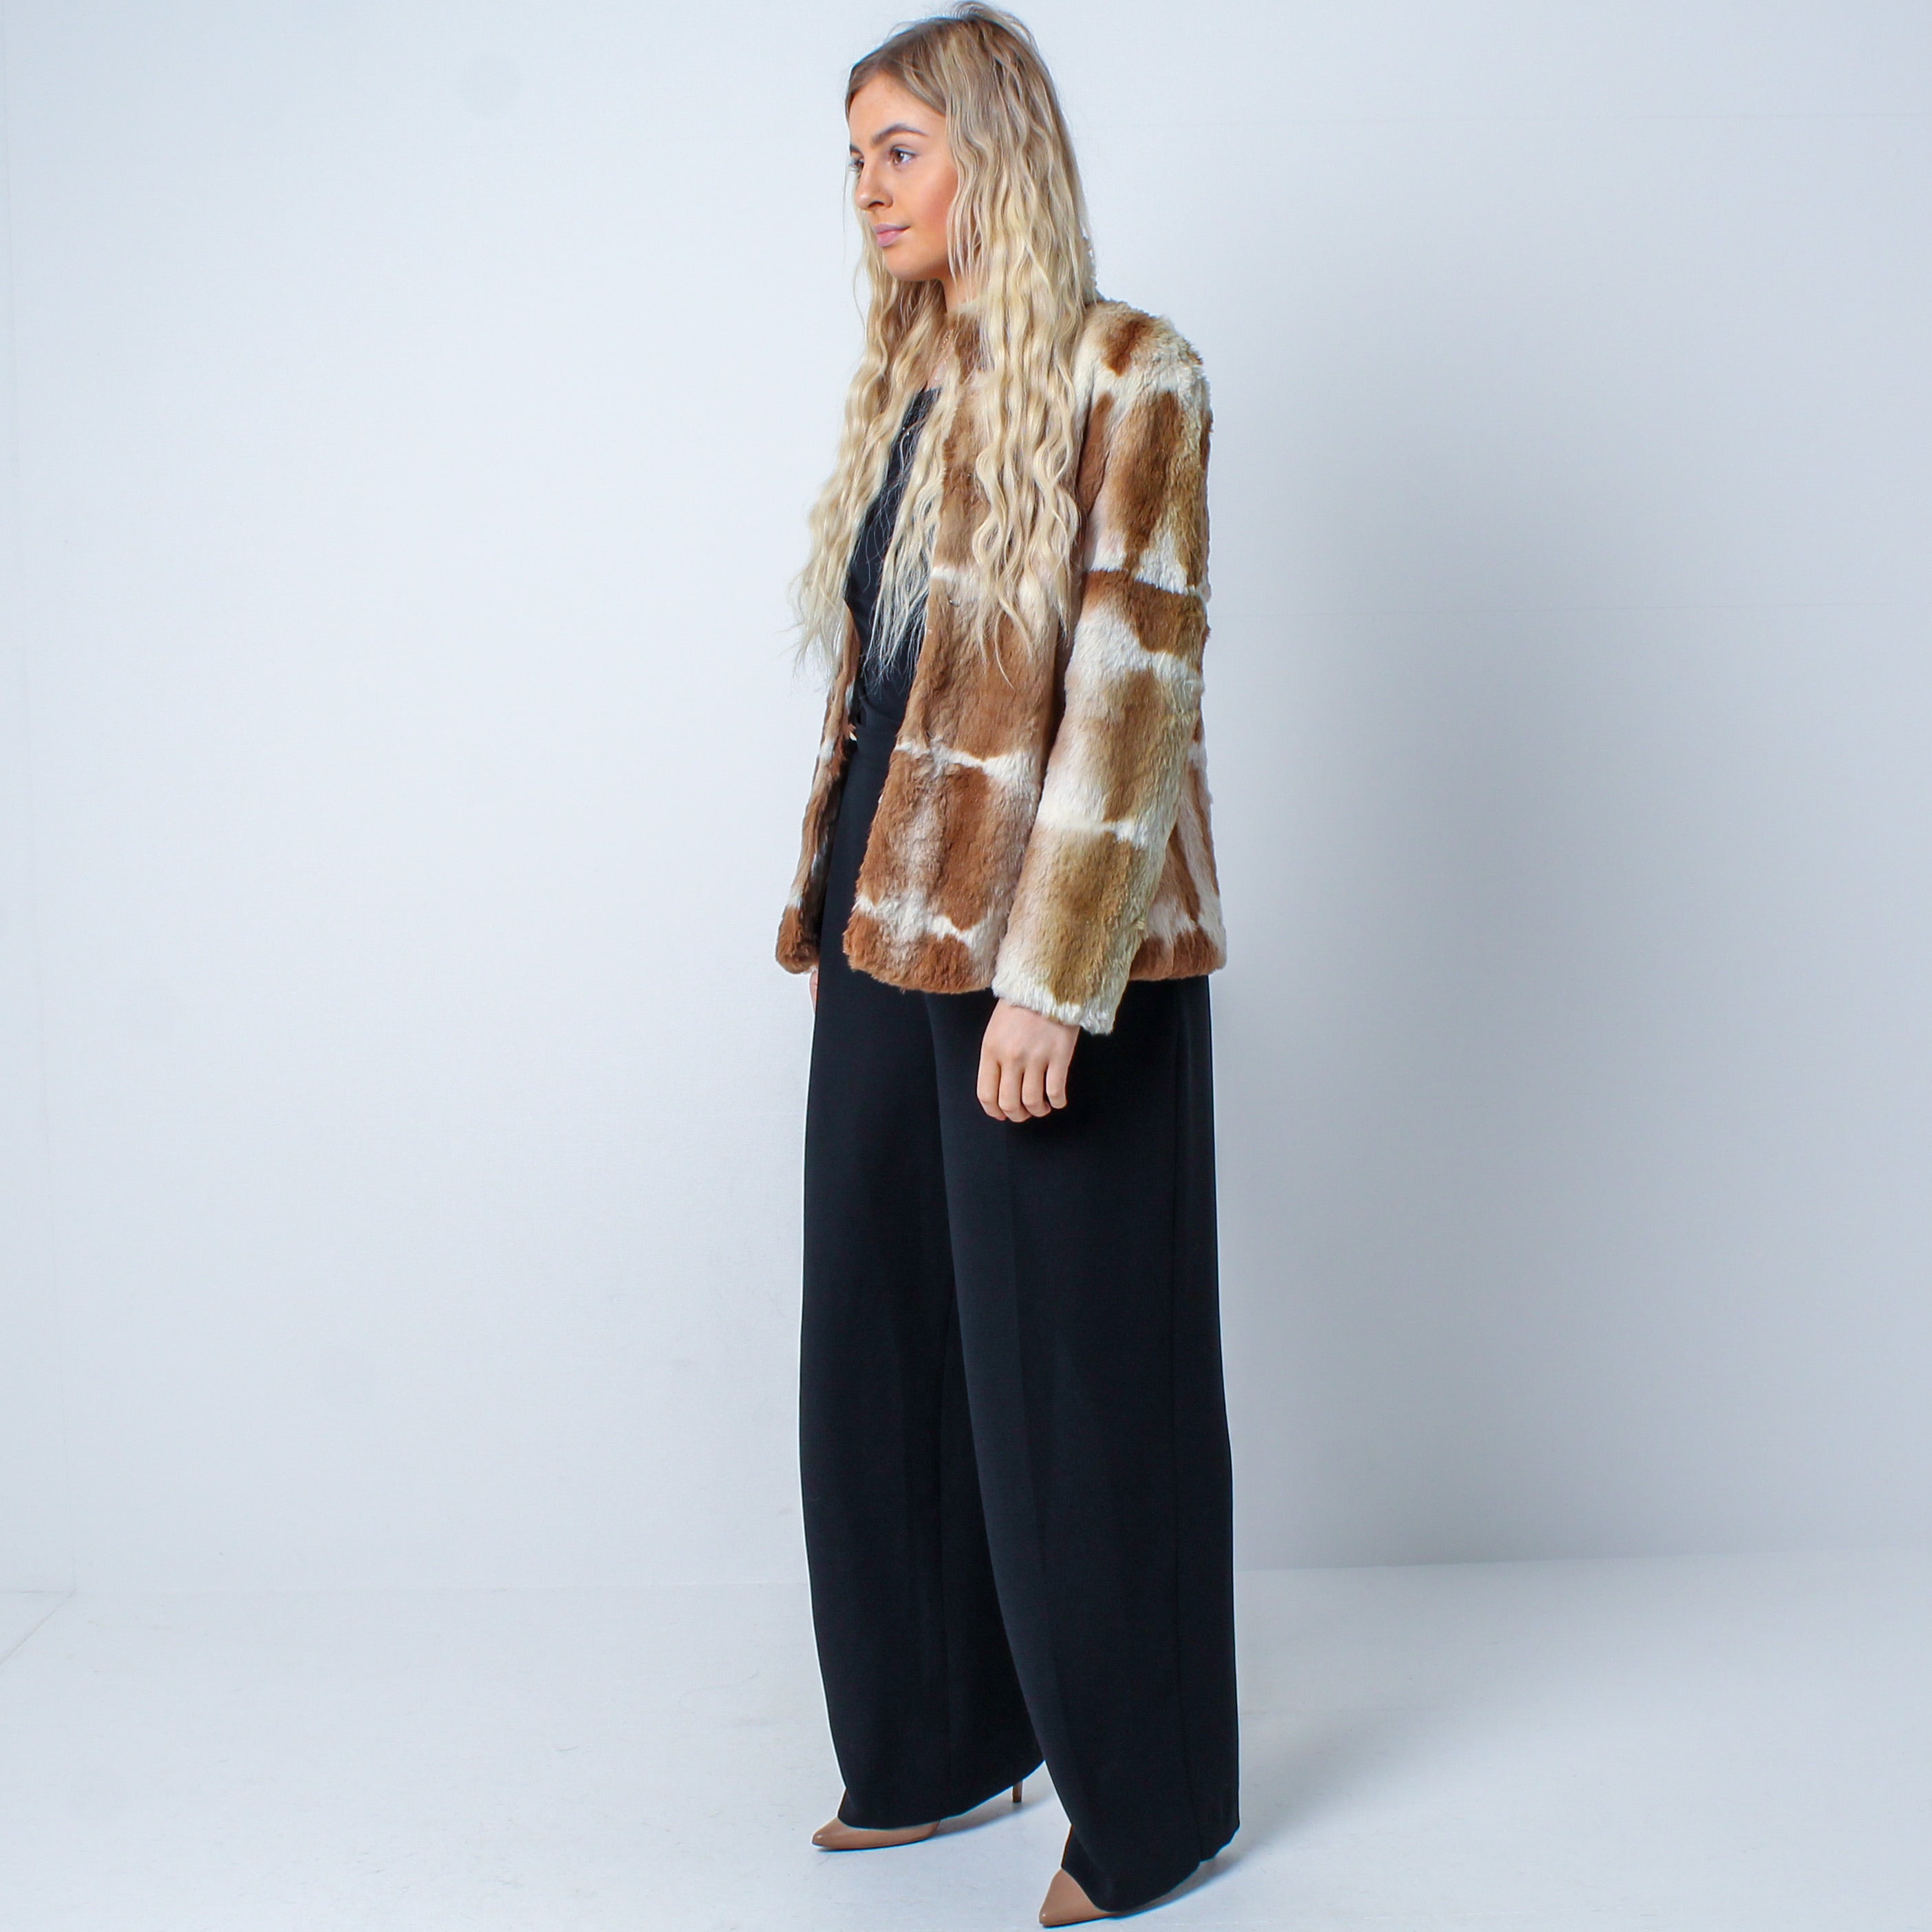 Women’s Vintage Real Natural Rabbit Fur Coat Size: XS-Small UK 6-10